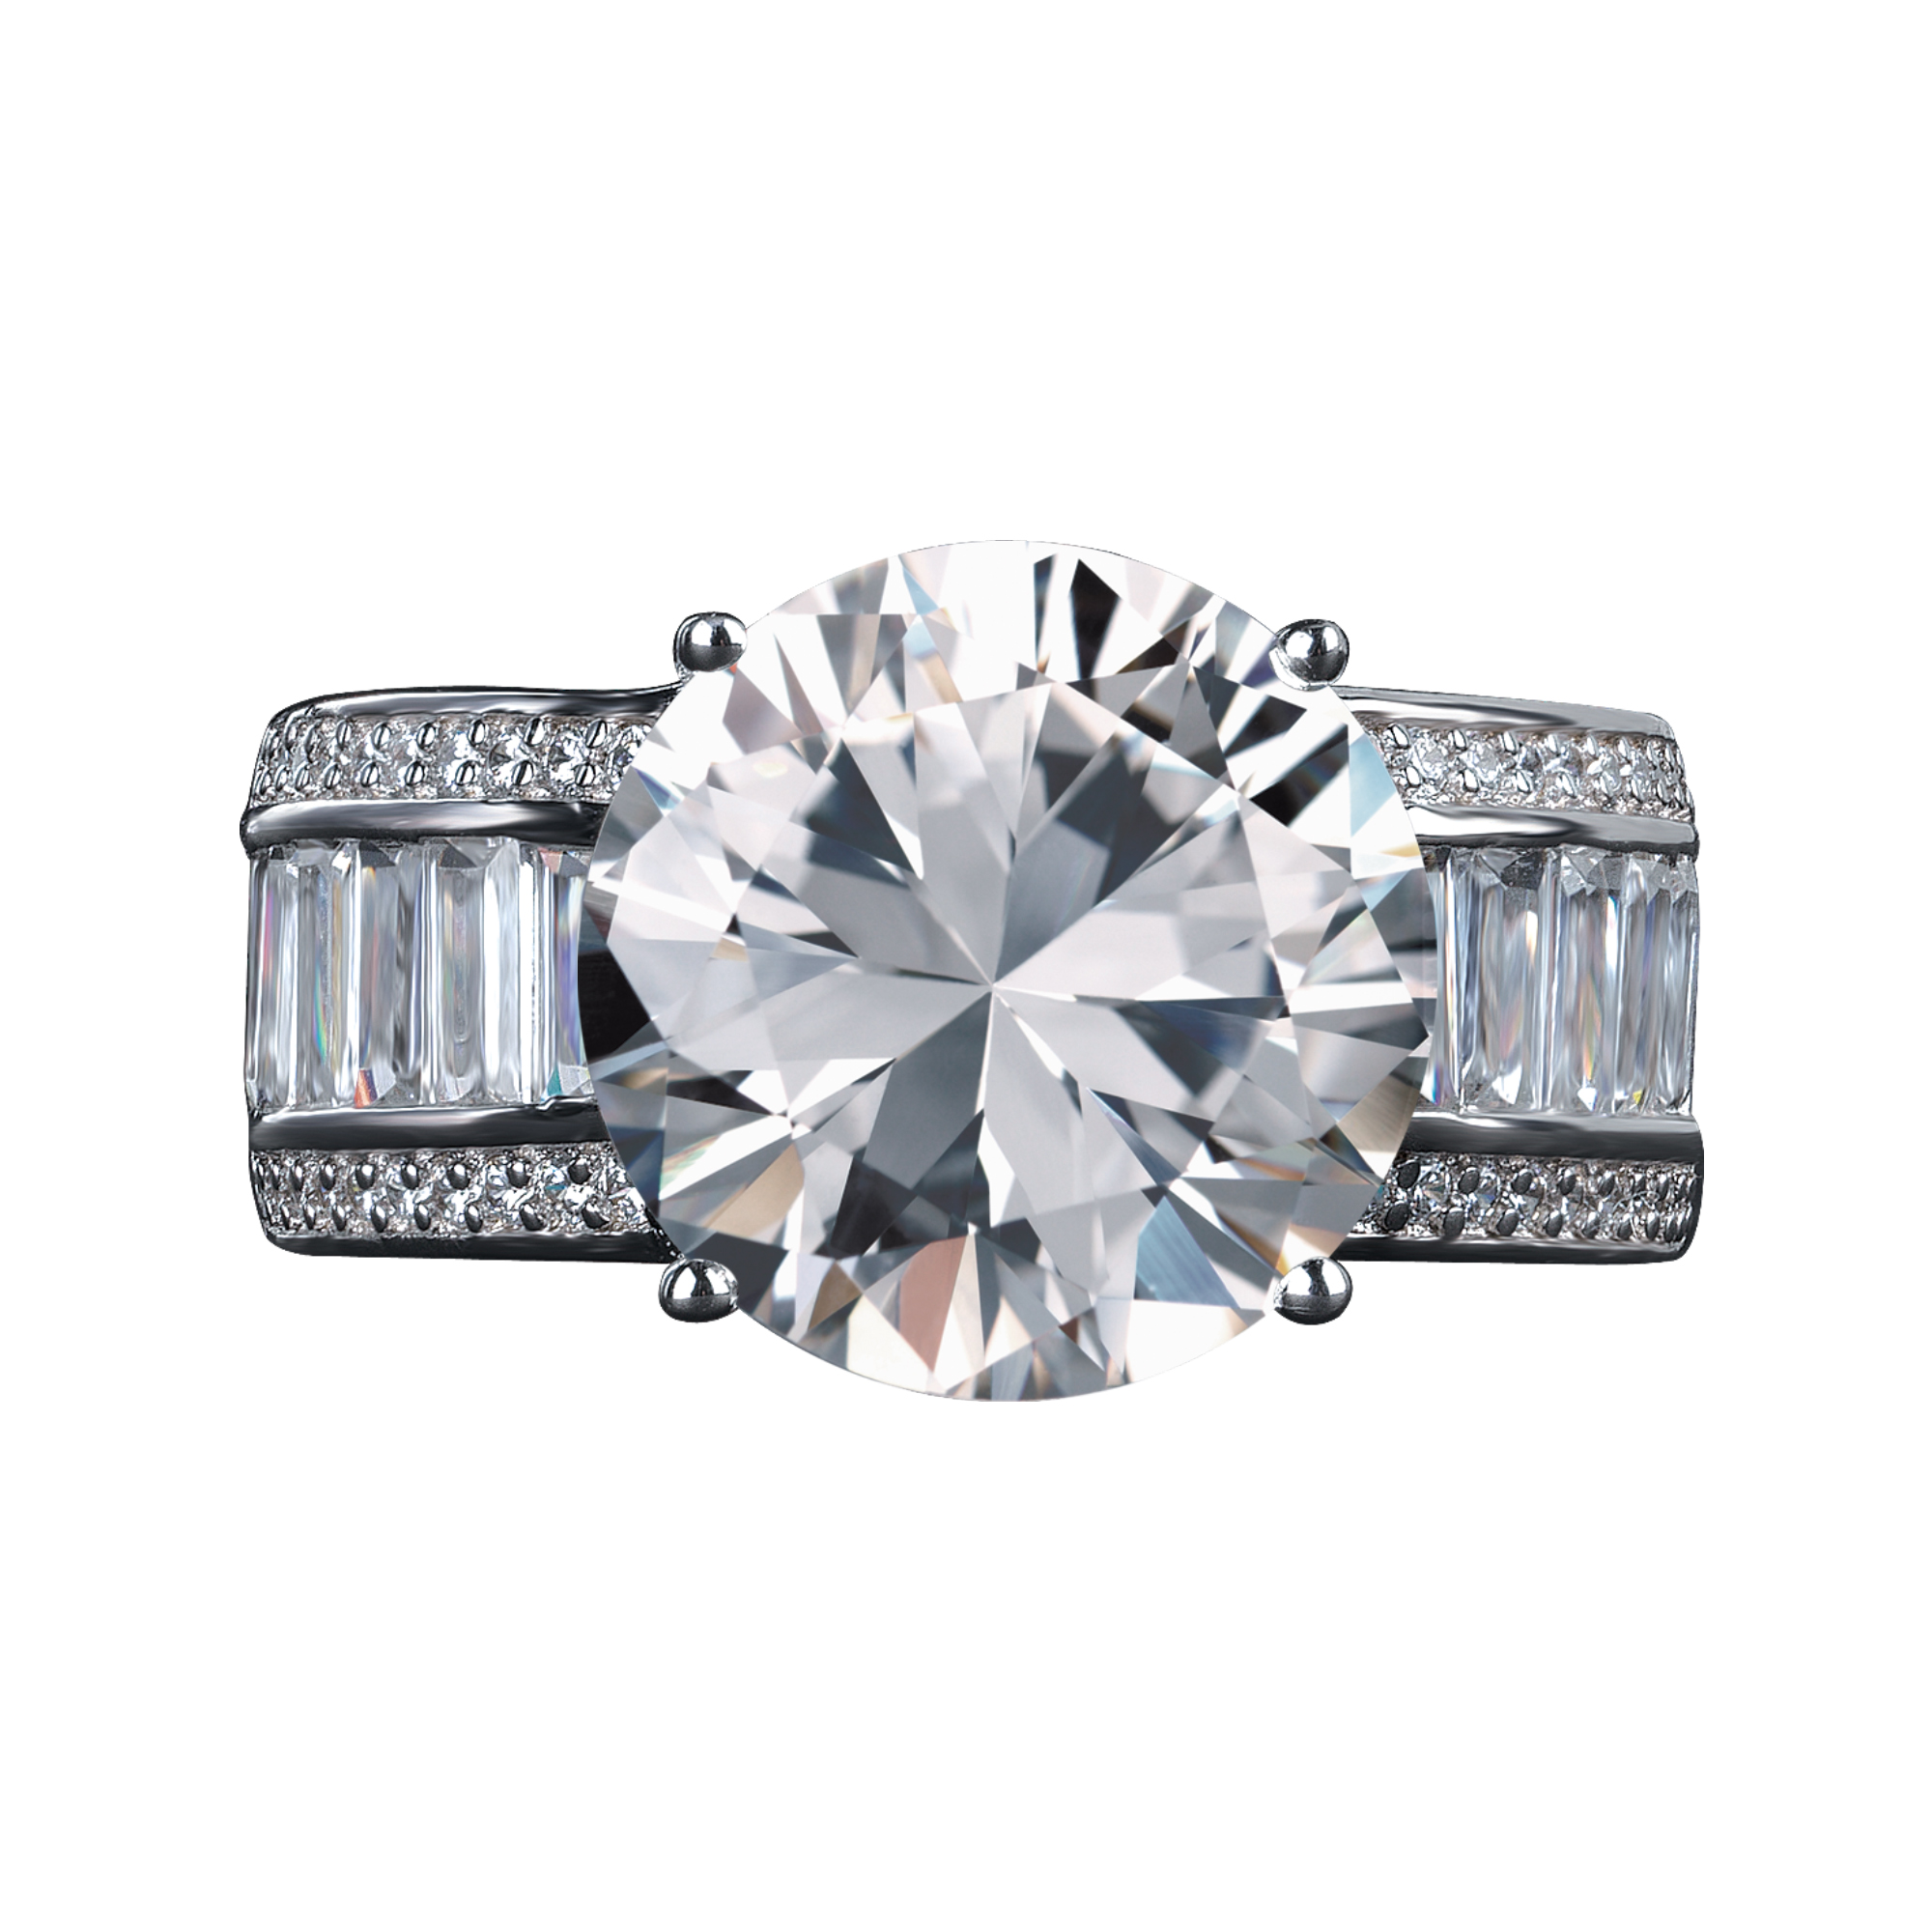 True Beauty Sterling Silver Ring 10278 0012 a main